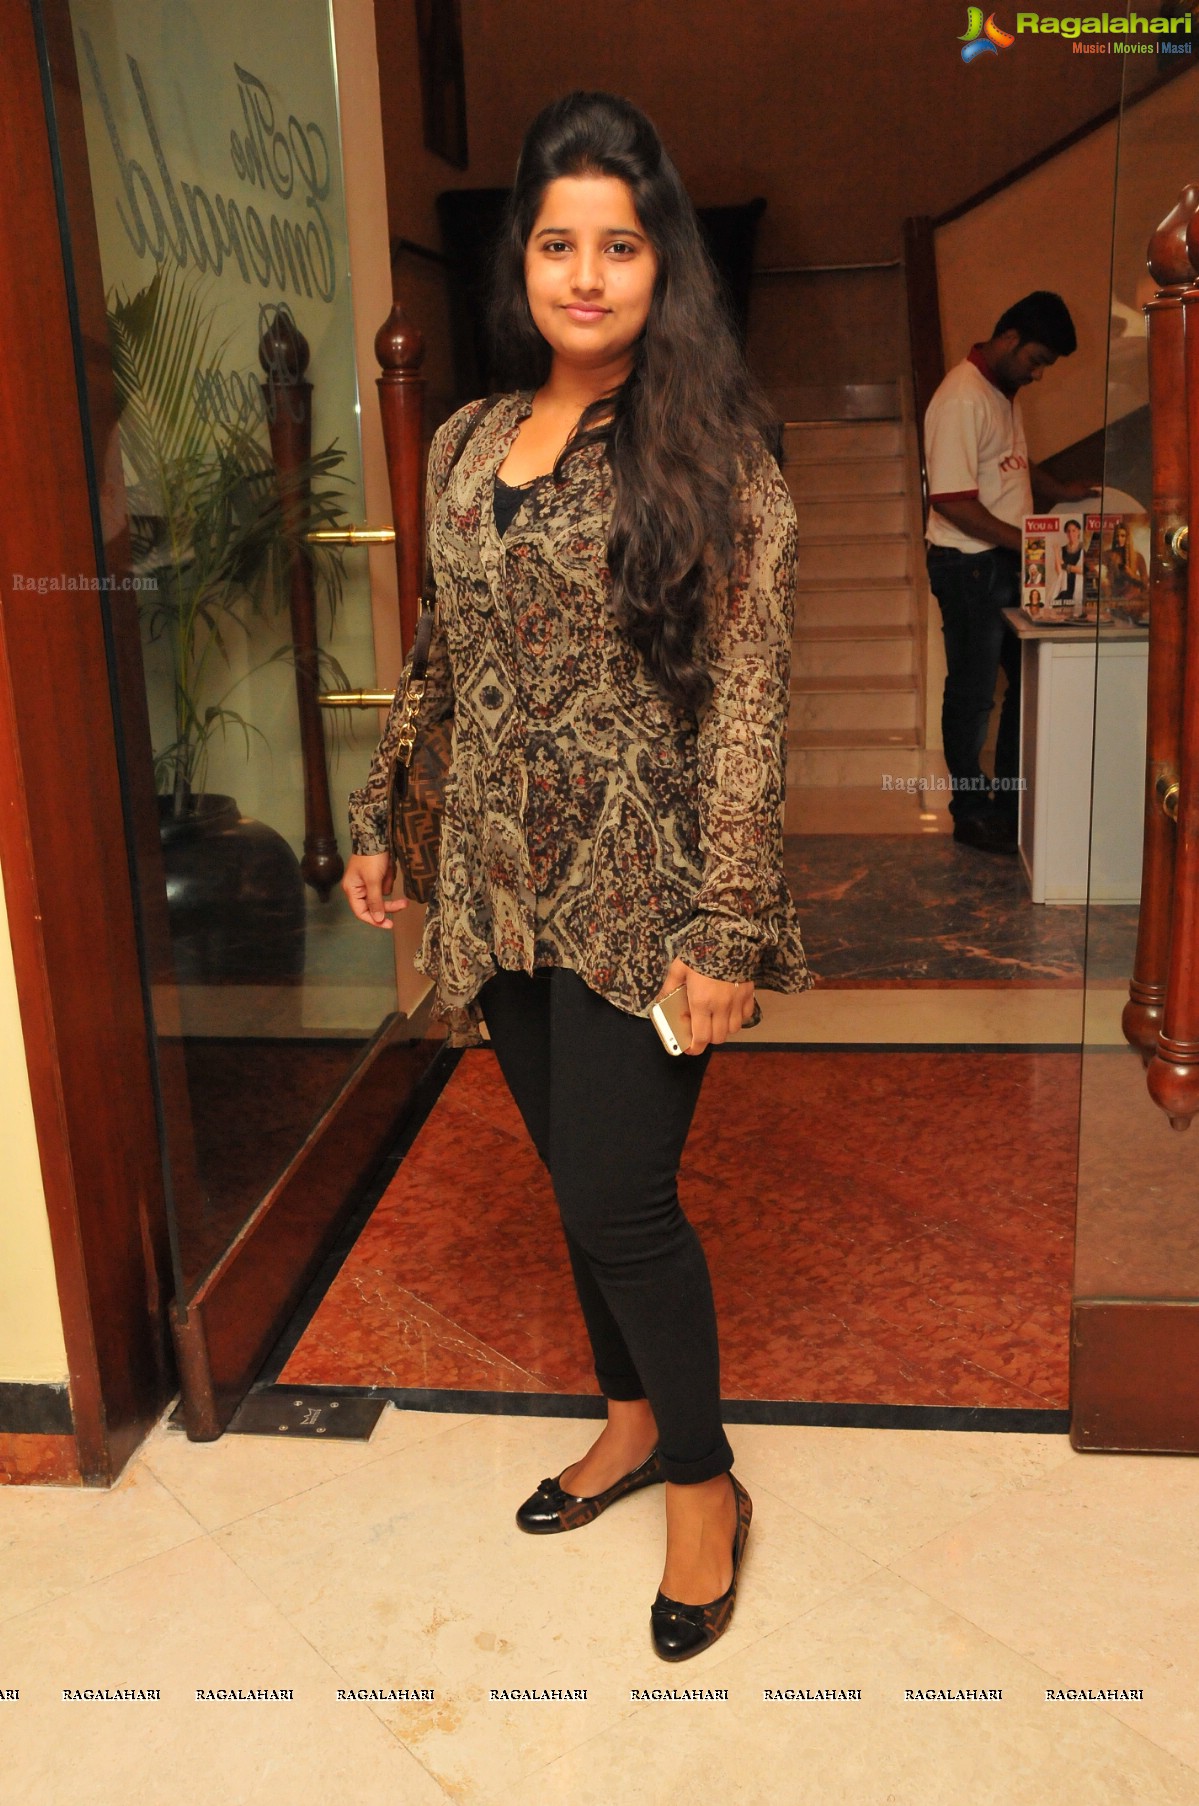 Fashion Yatra Exhibition, Hyderabad (Oct. 2014)